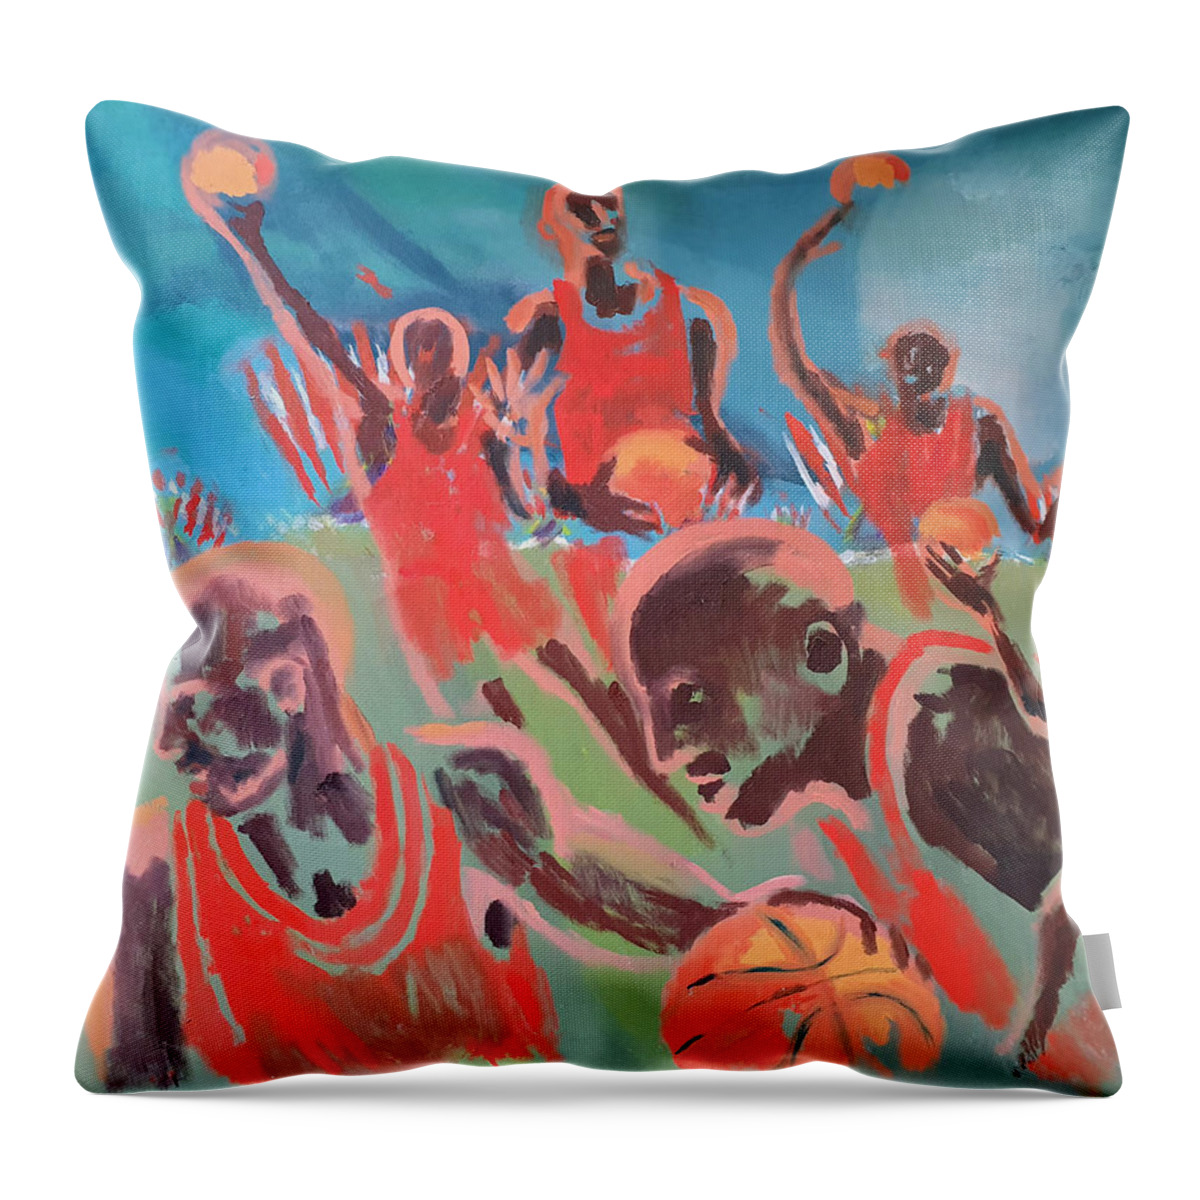 Enrico Garff Throw Pillow featuring the painting Basketball Soul by Enrico Garff